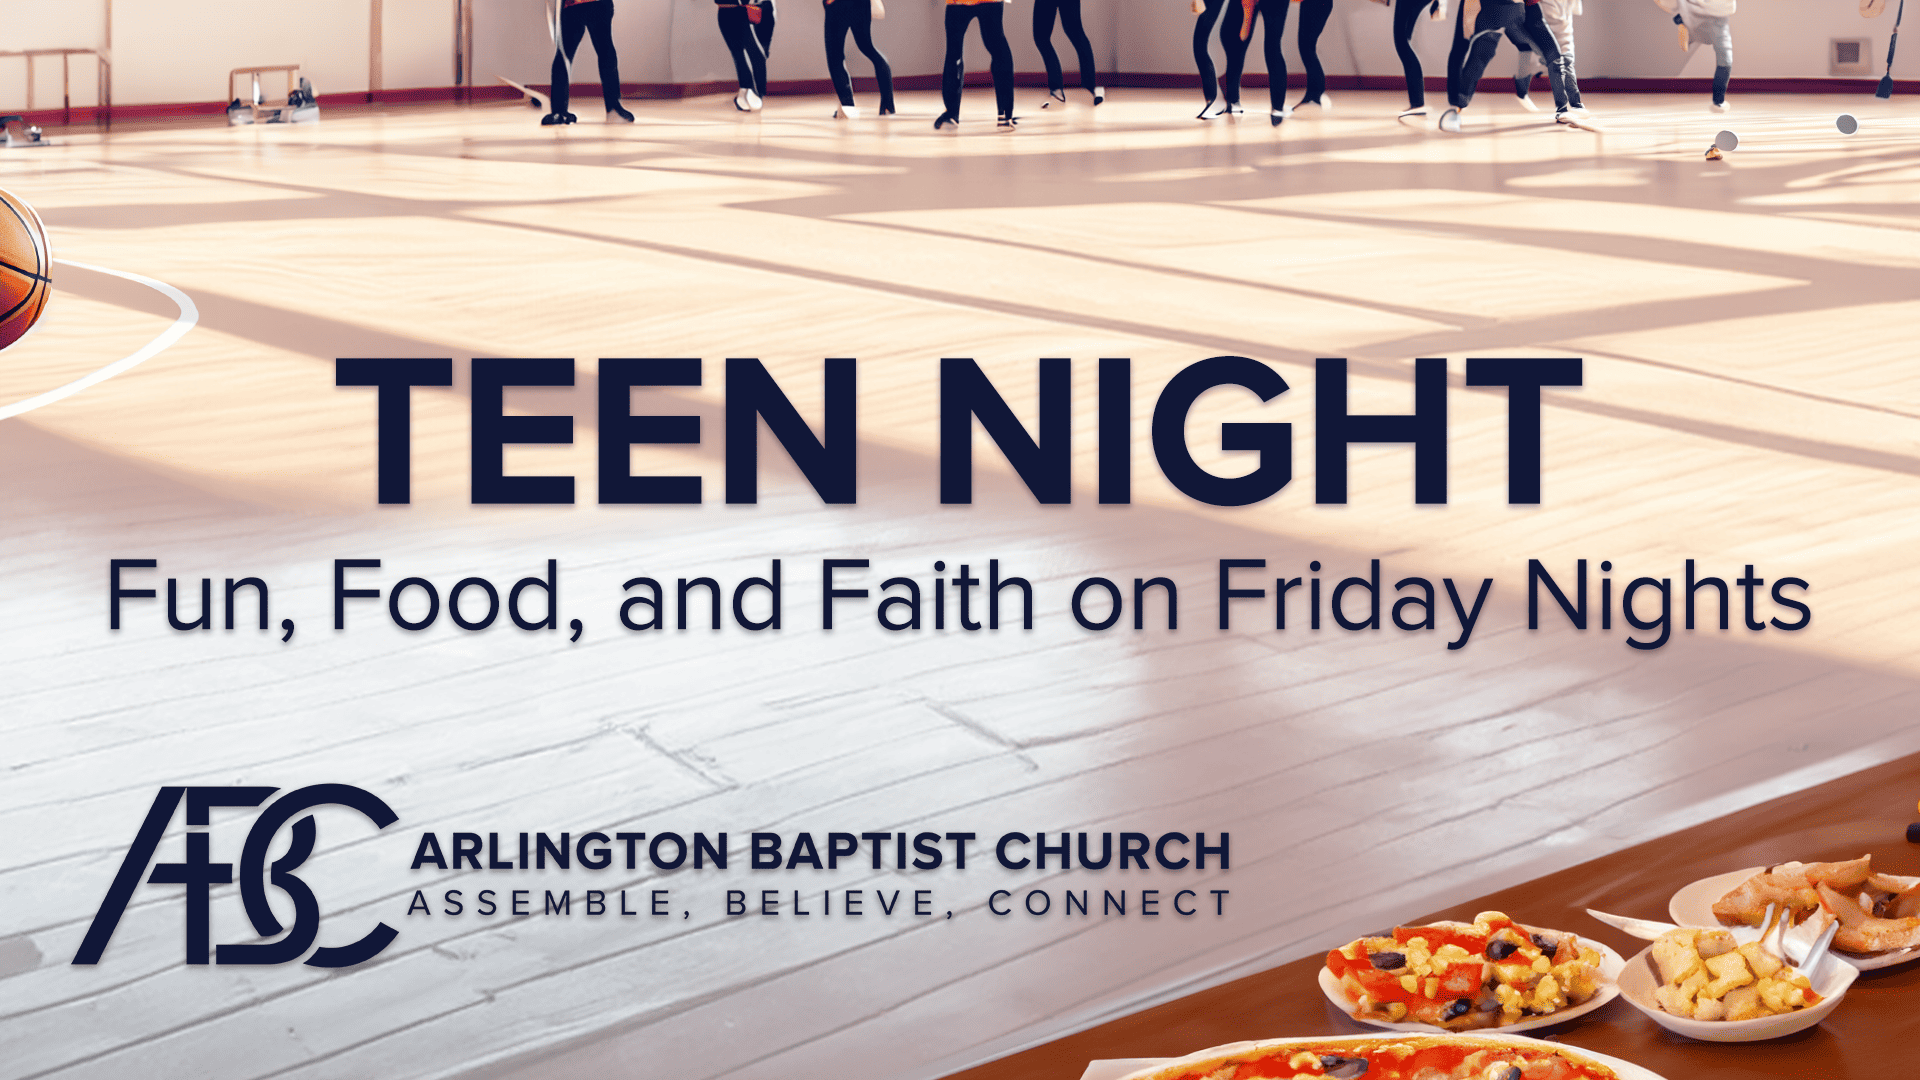 Teen Night at Arlington Baptist Church